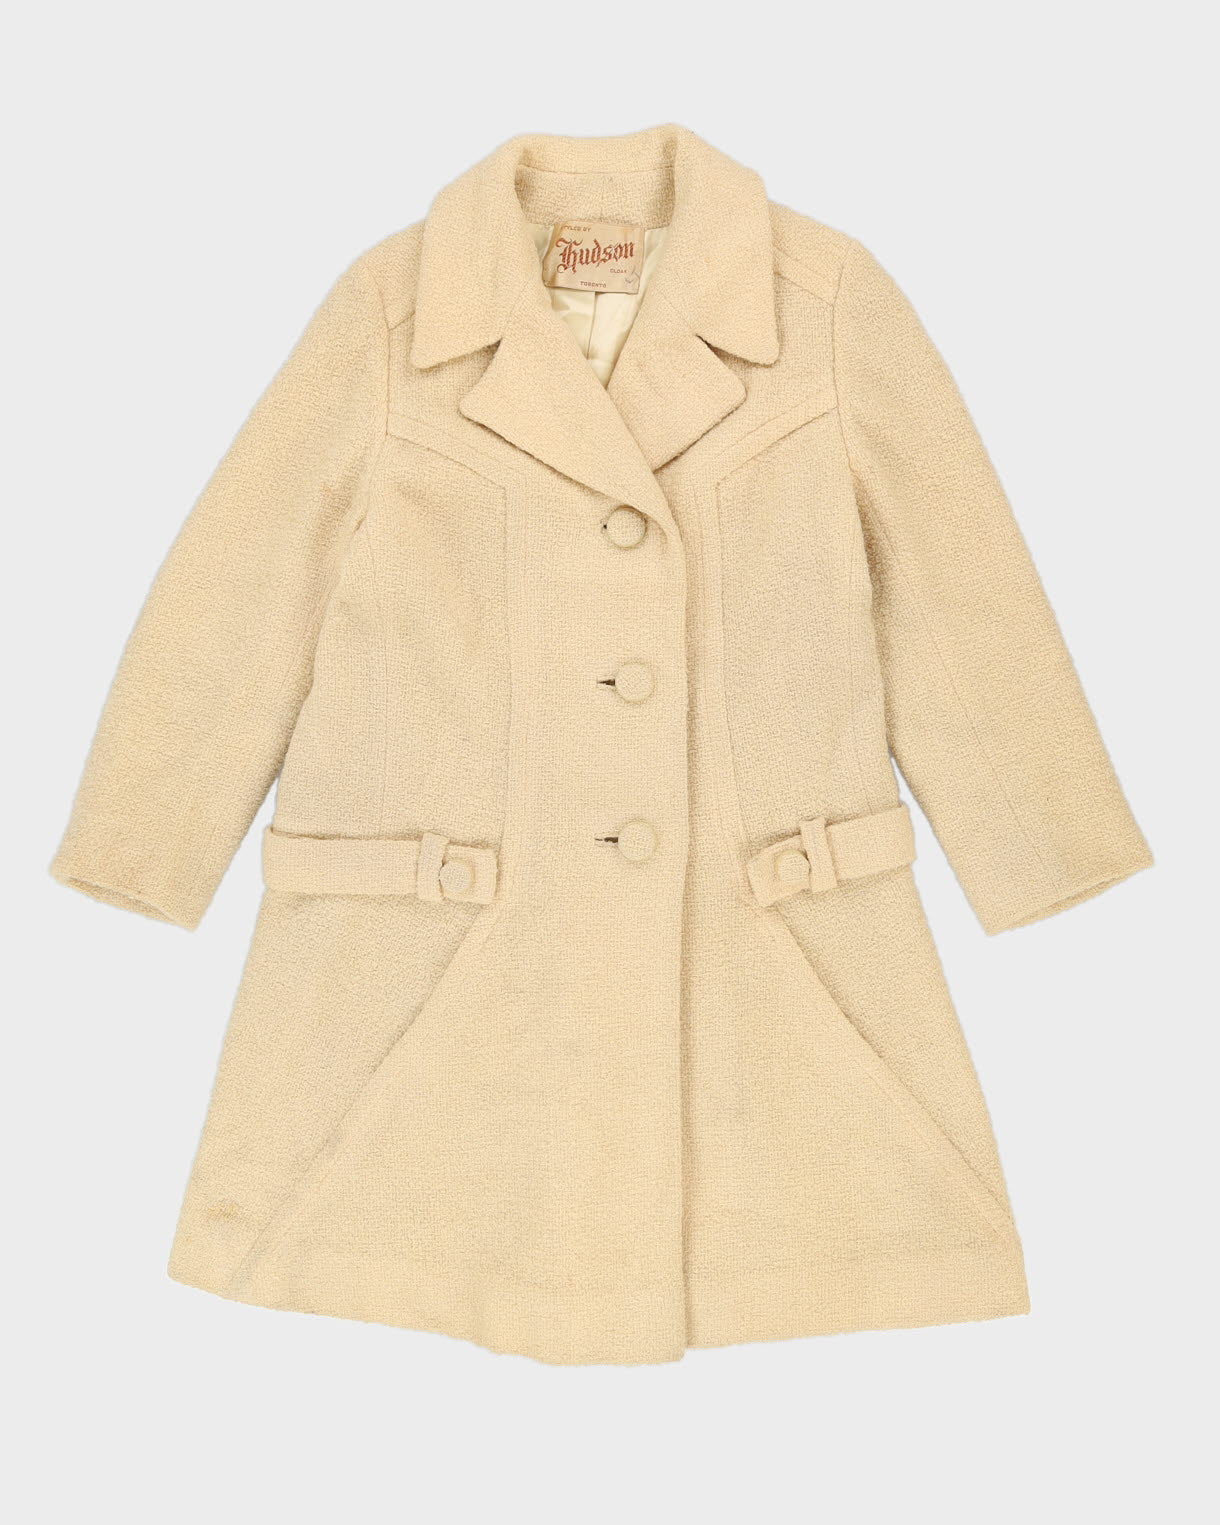 Vintage 1960s Cream Overcoat - S